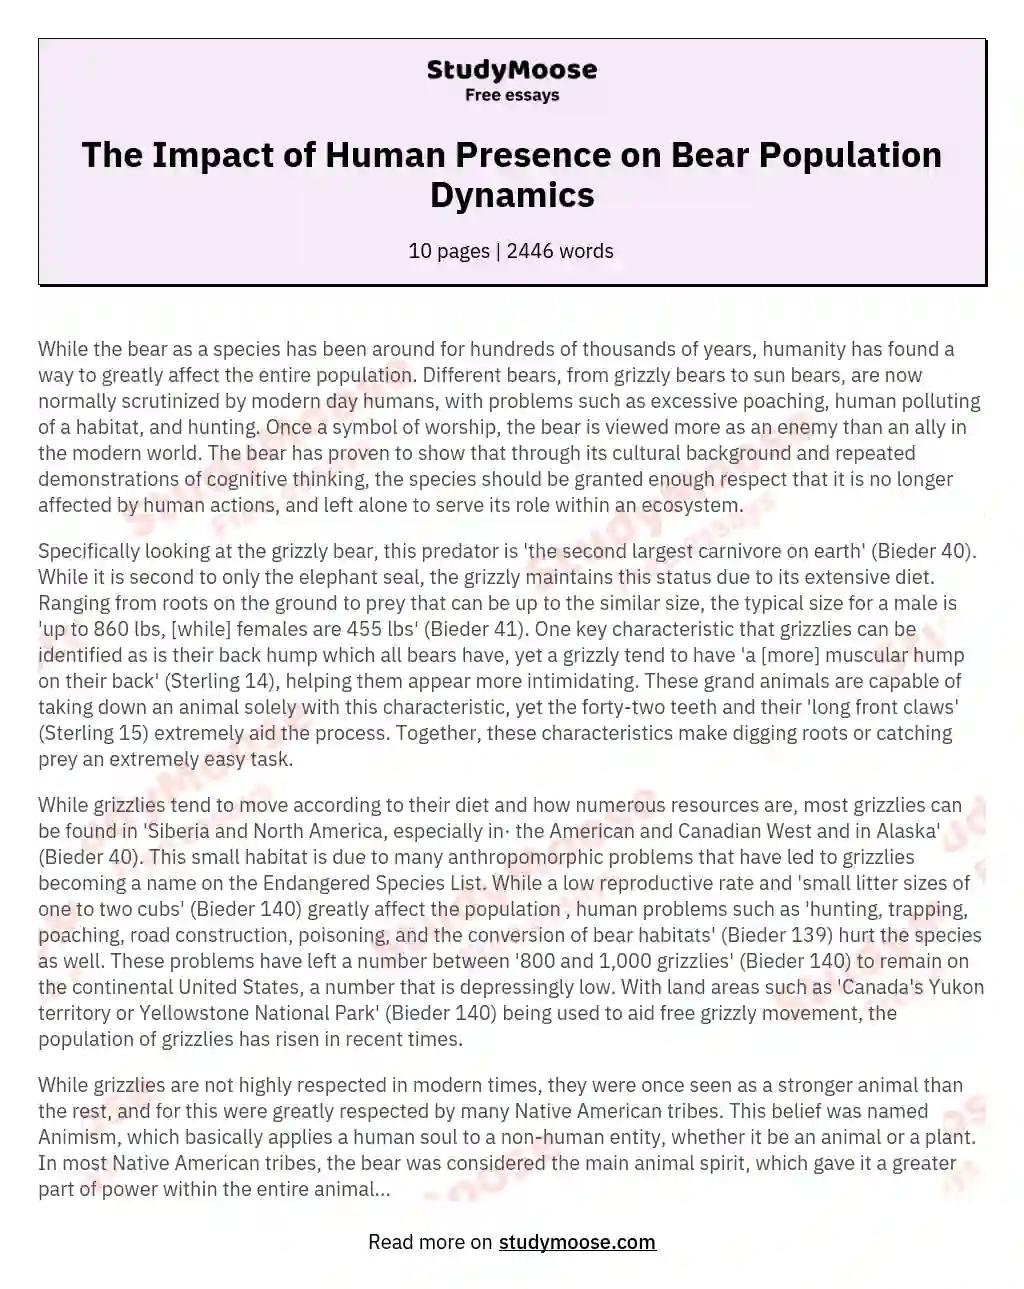 The Impact of Human Presence on Bear Population Dynamics essay